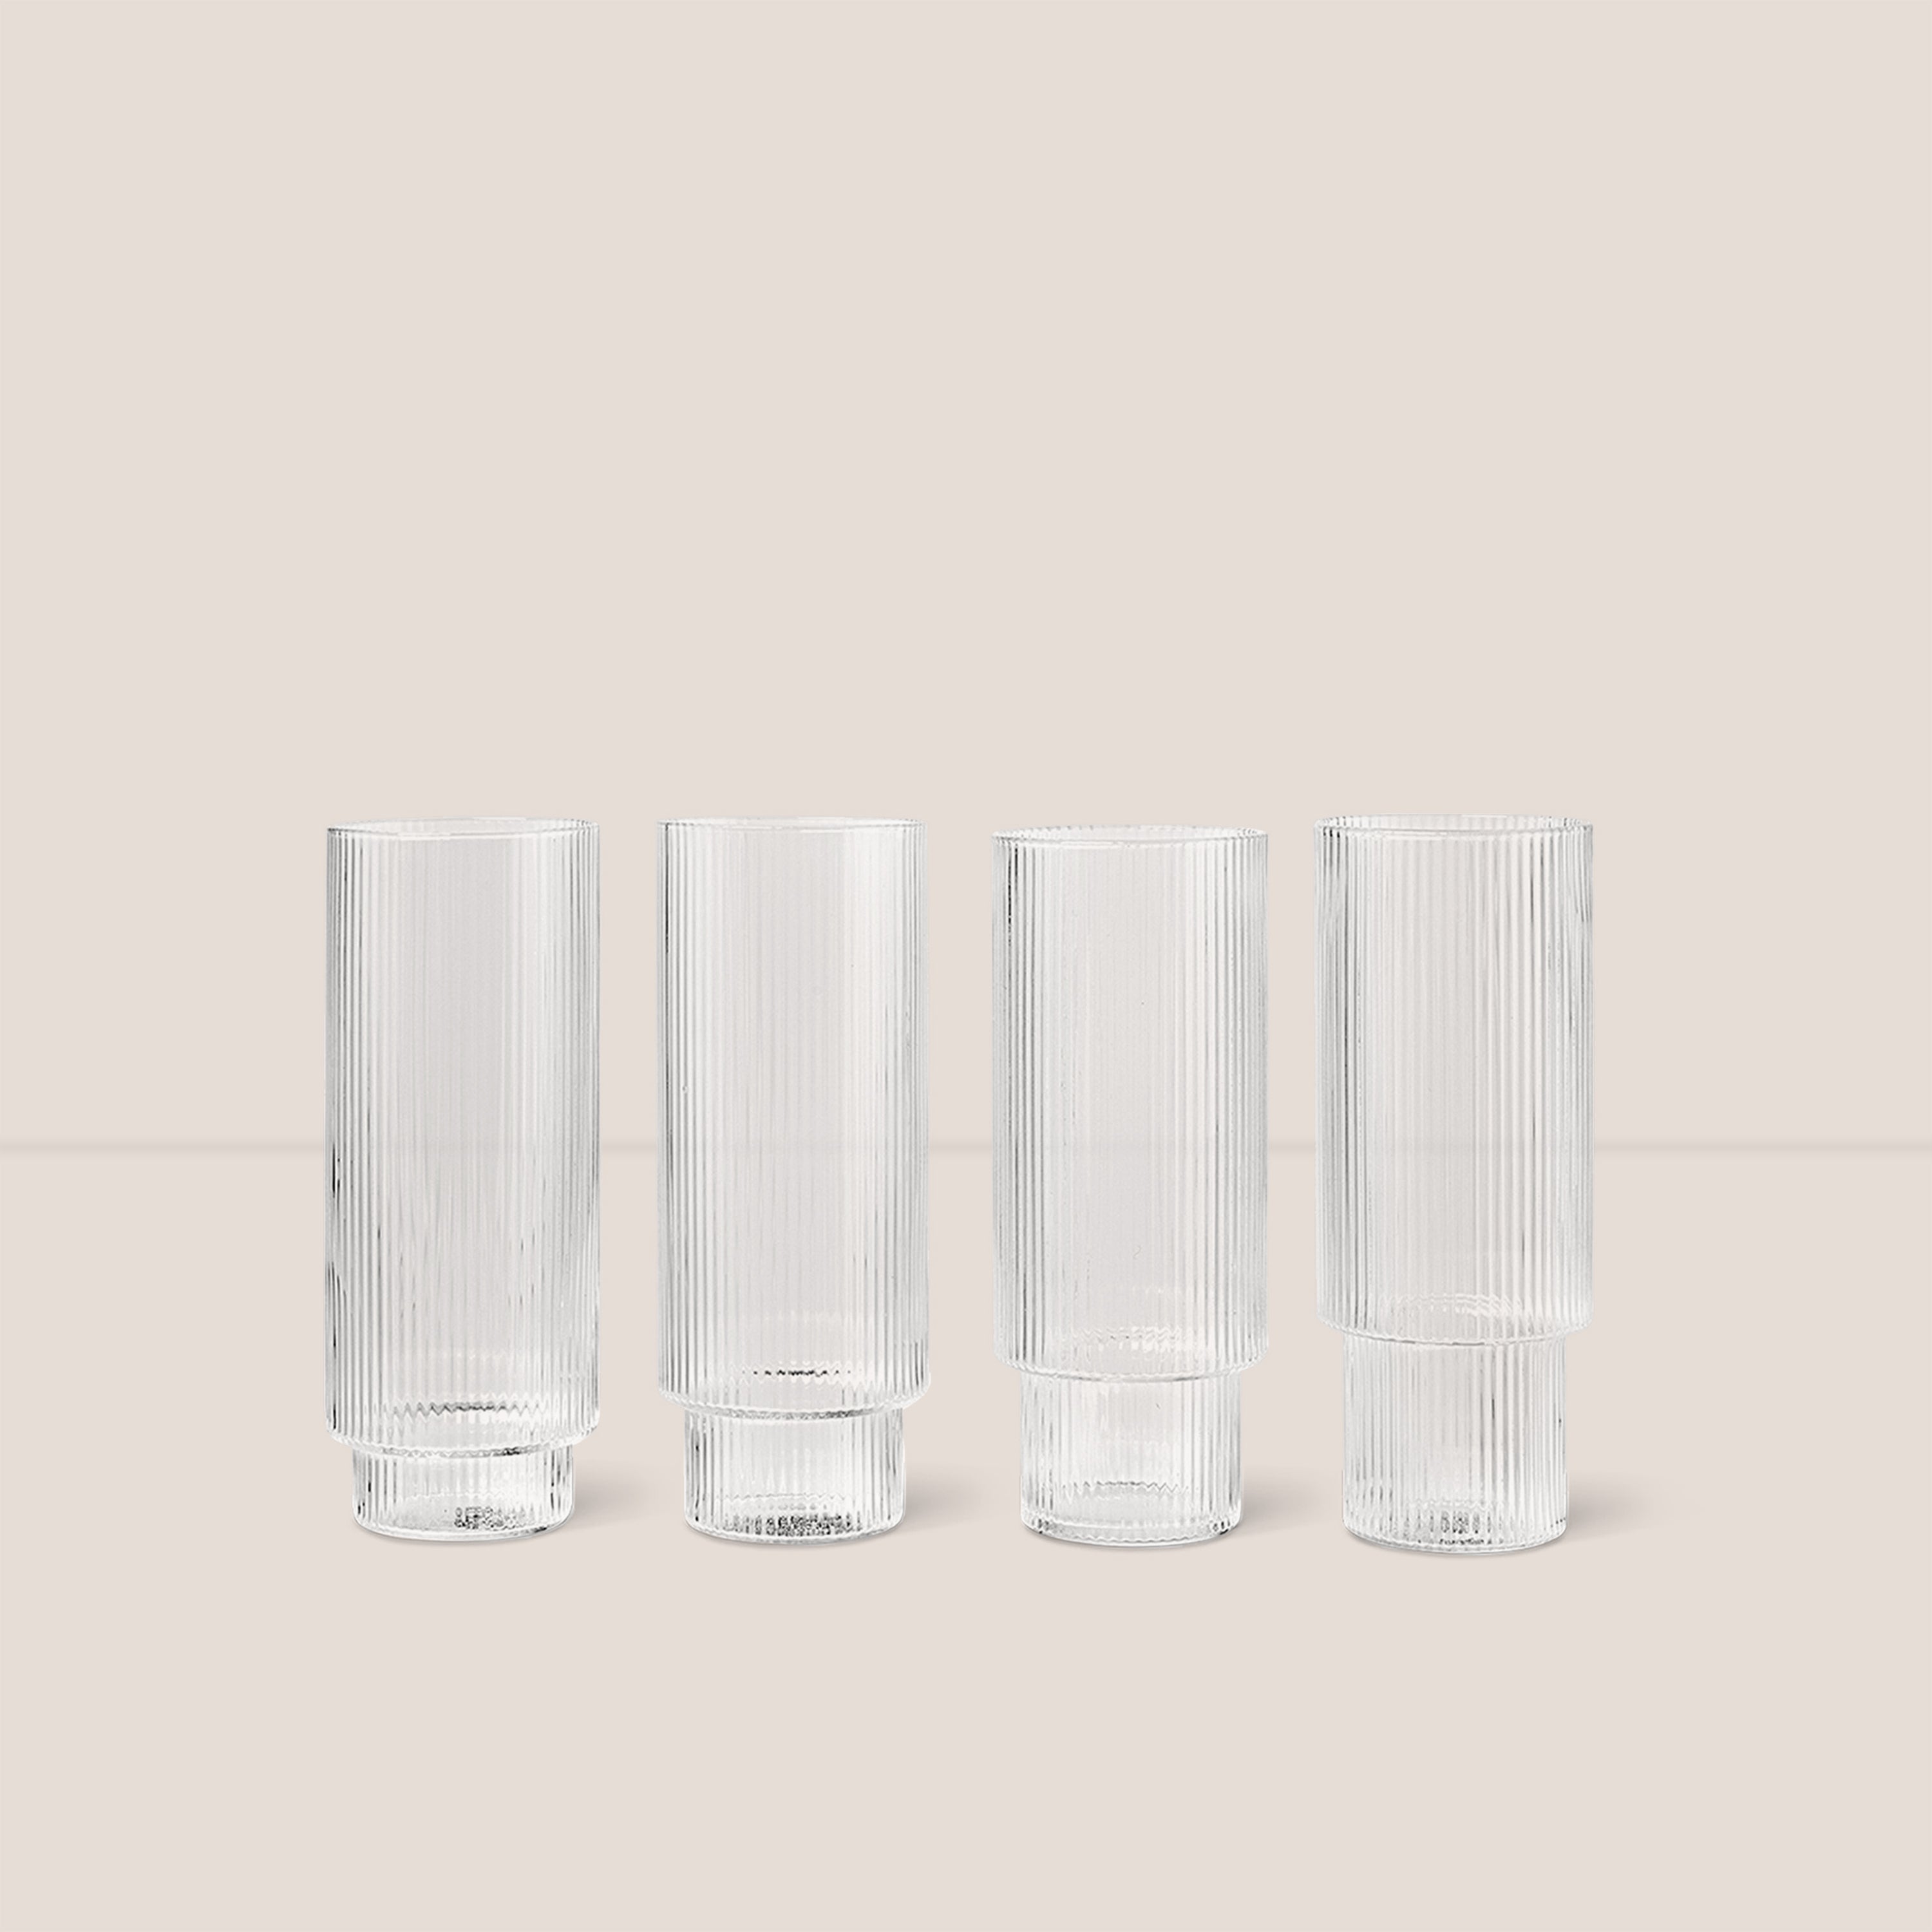 Ripple Drinking Glasses (Set of 4)